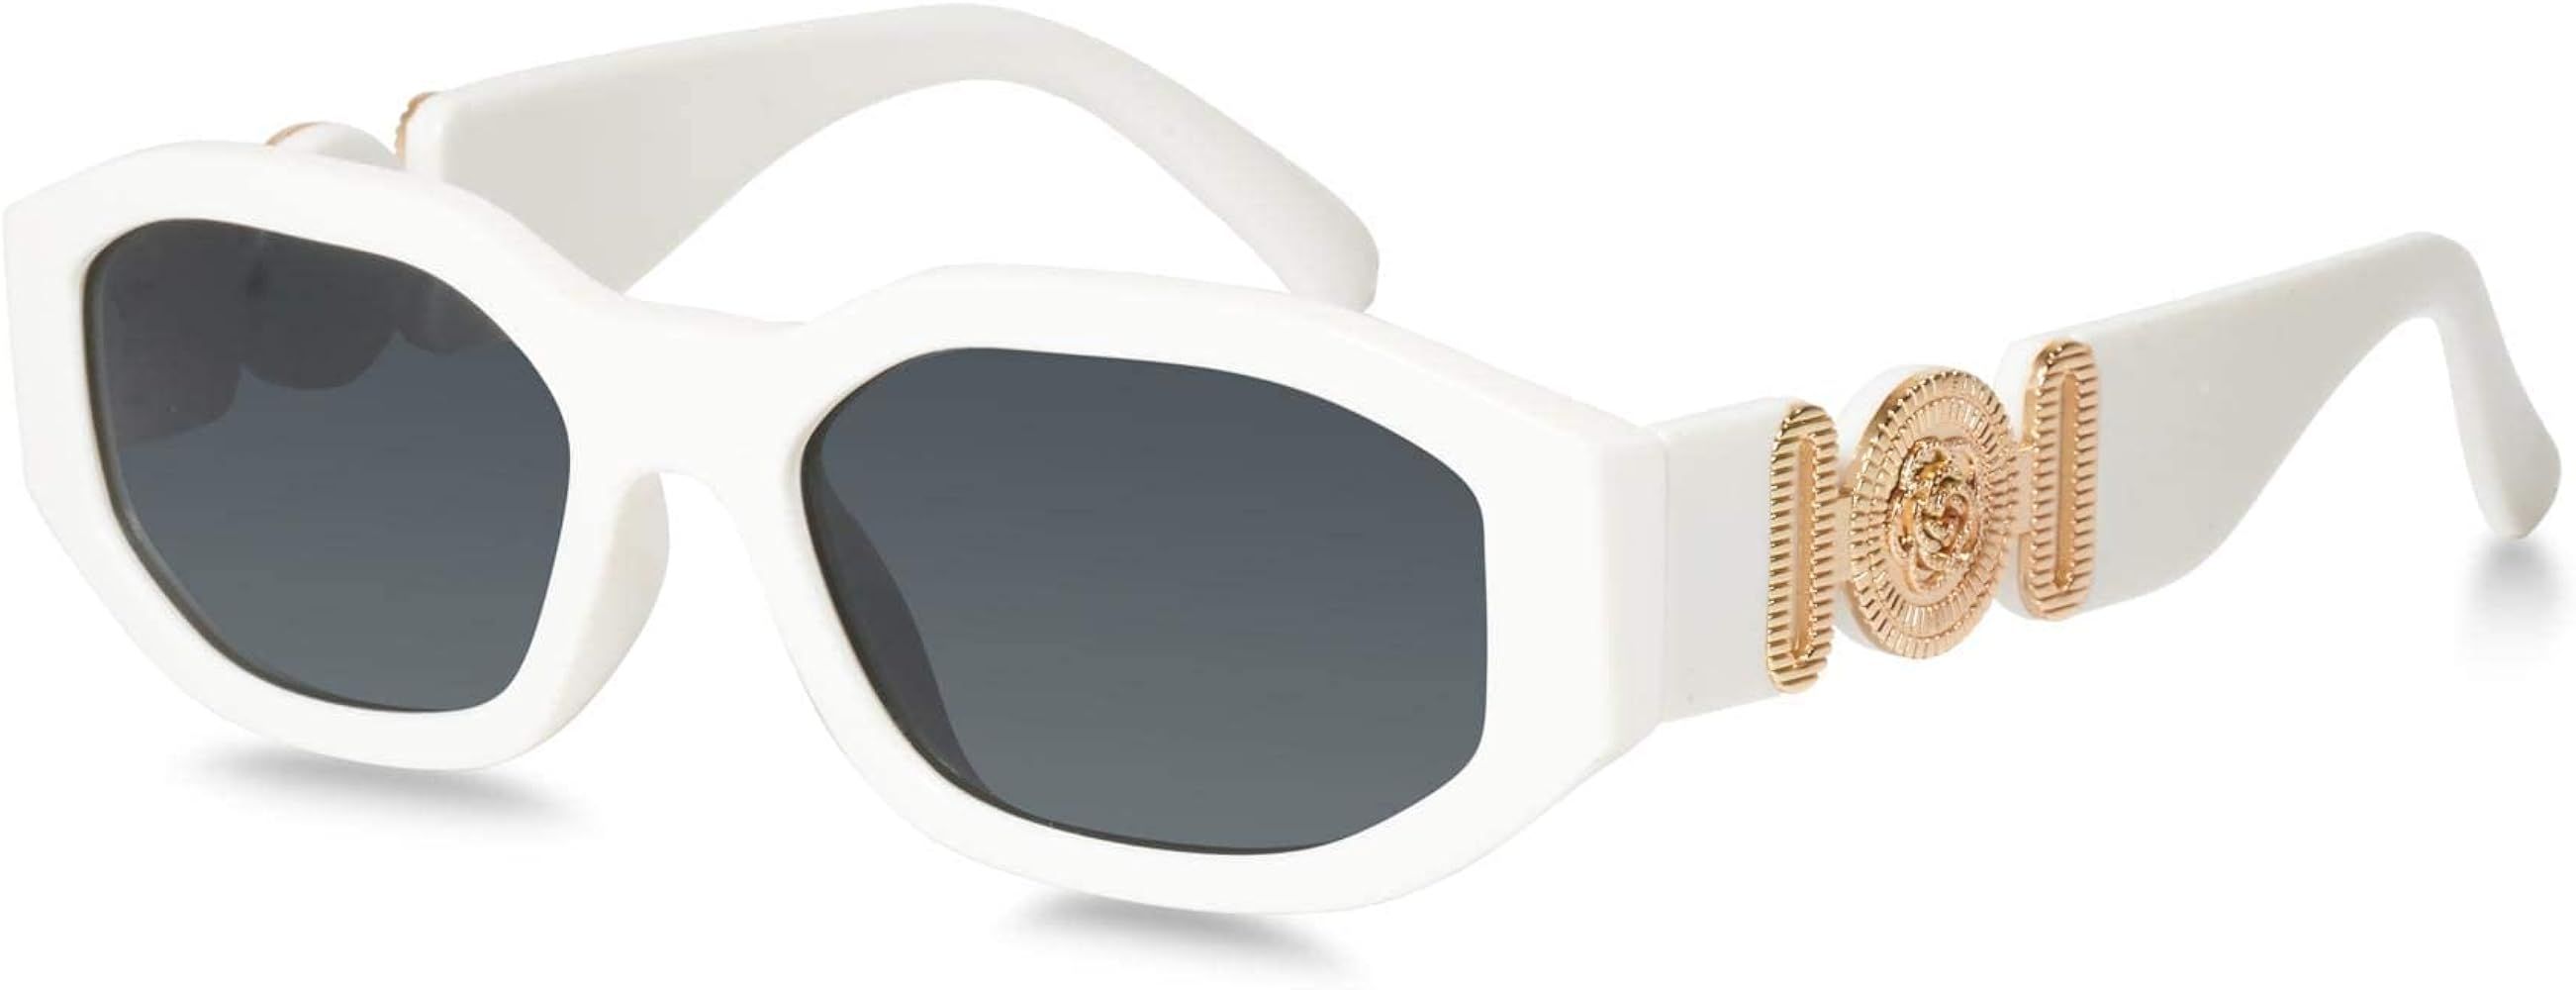 mosanana Trendy Rectangle Sunglasses for Women Men Model-TRACER | Amazon (US)